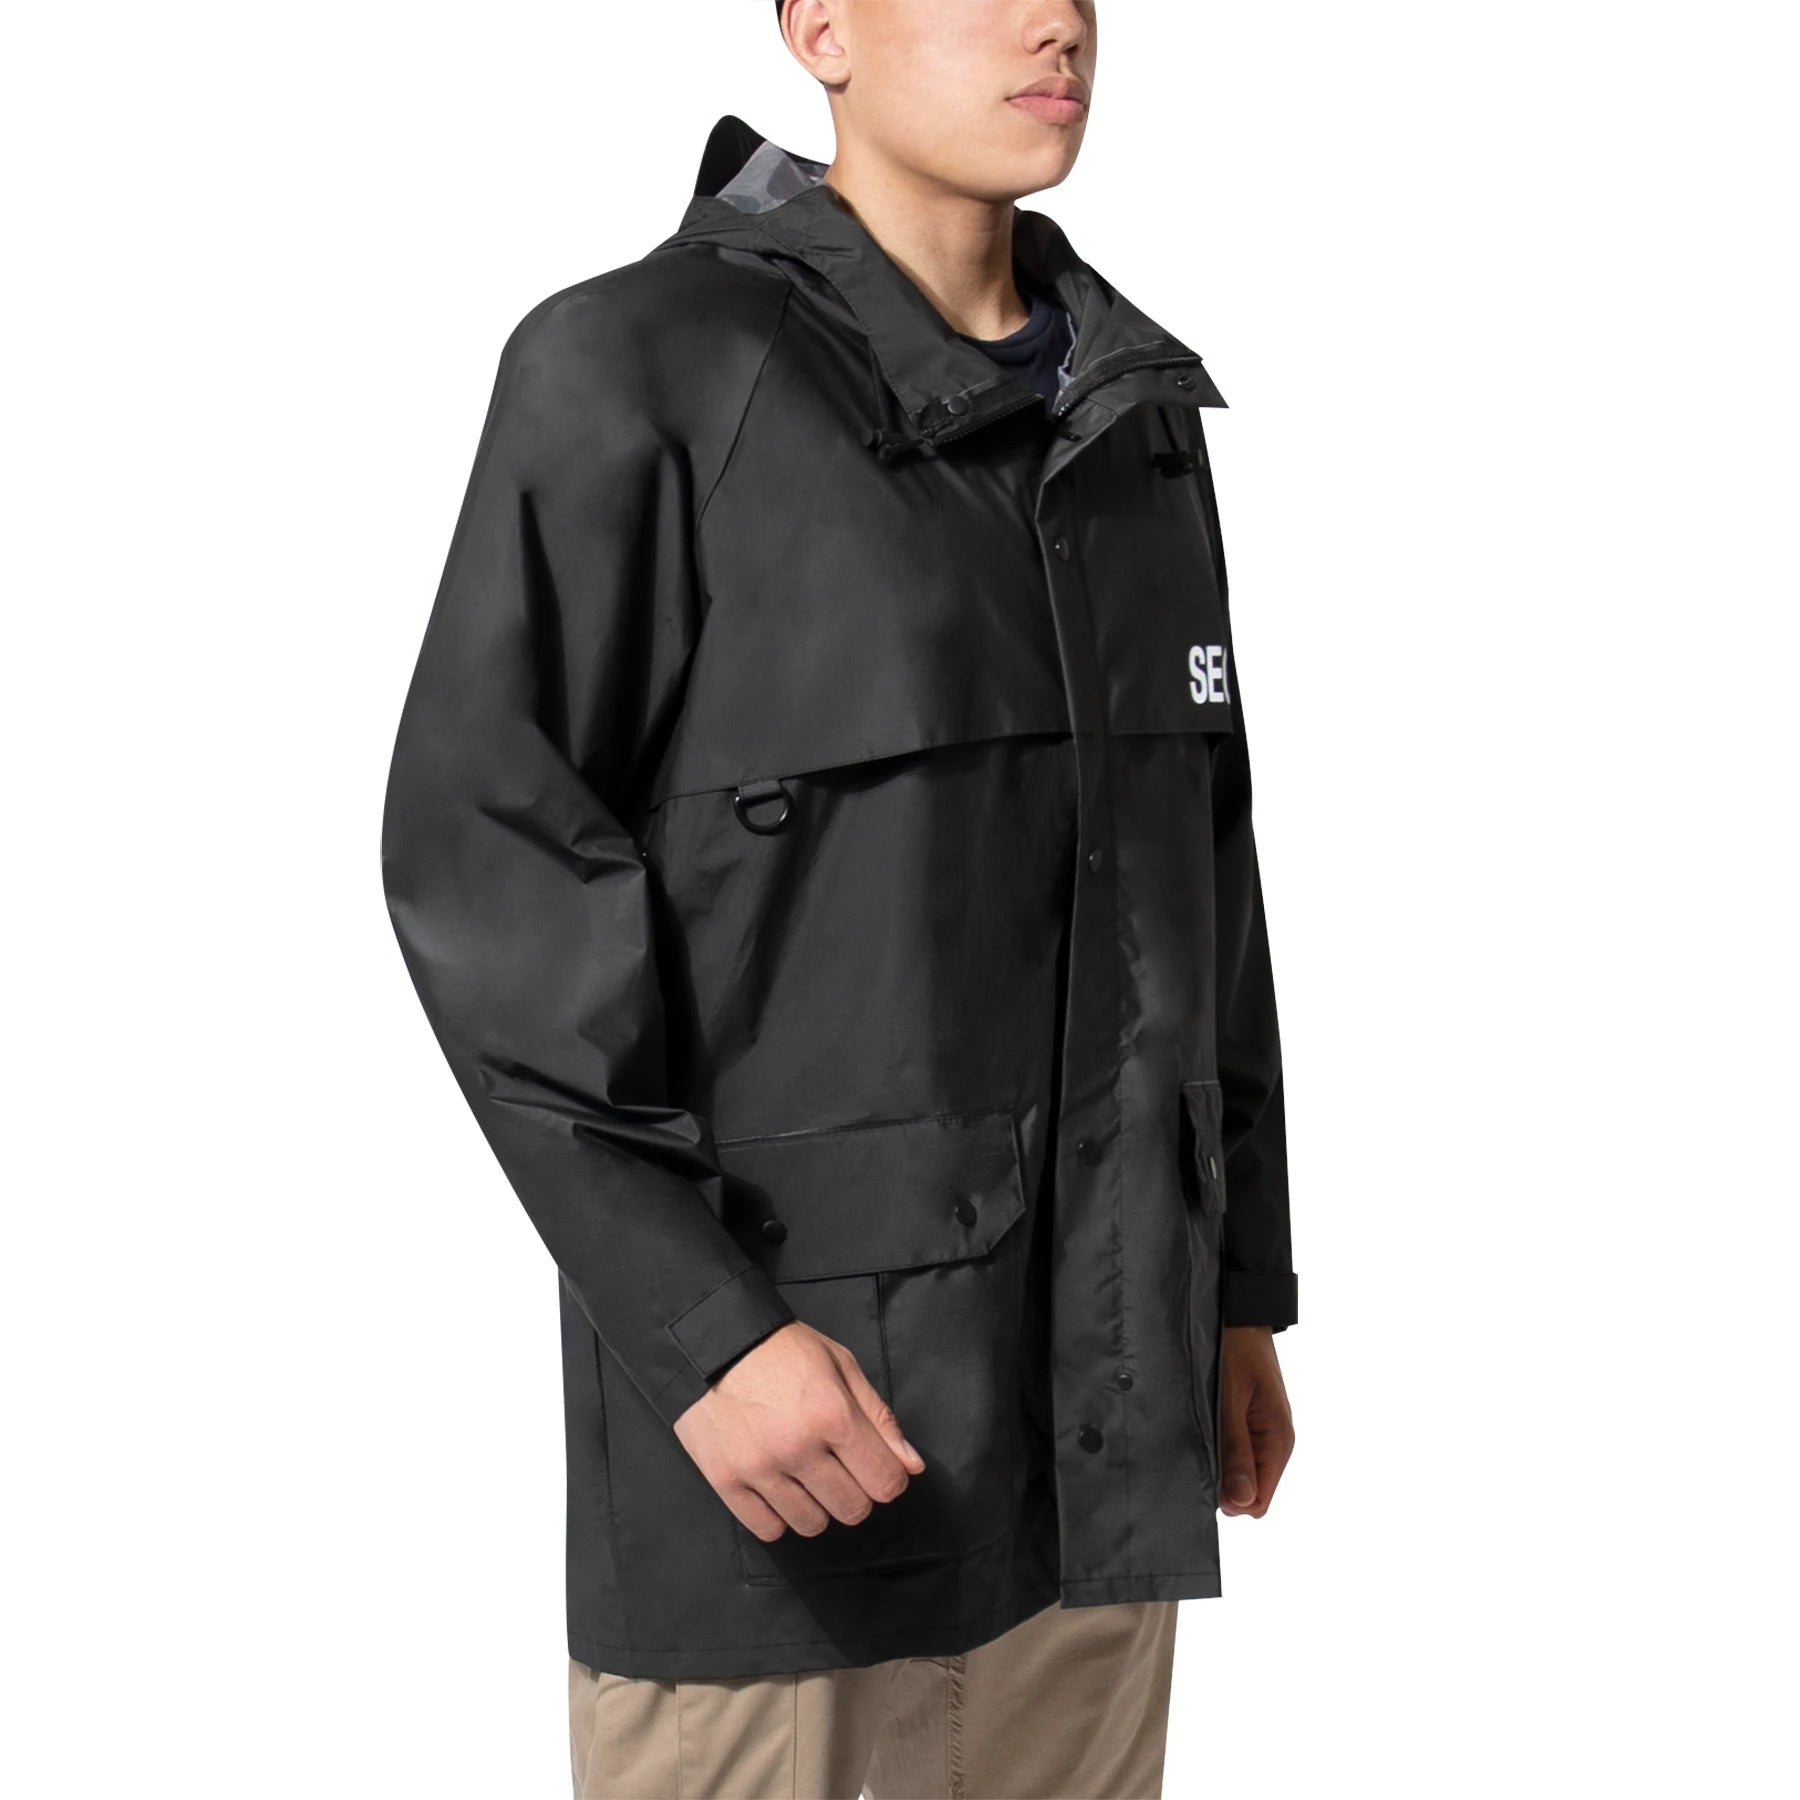 ROTHCo Security Rain Jacket – Security Pro USA